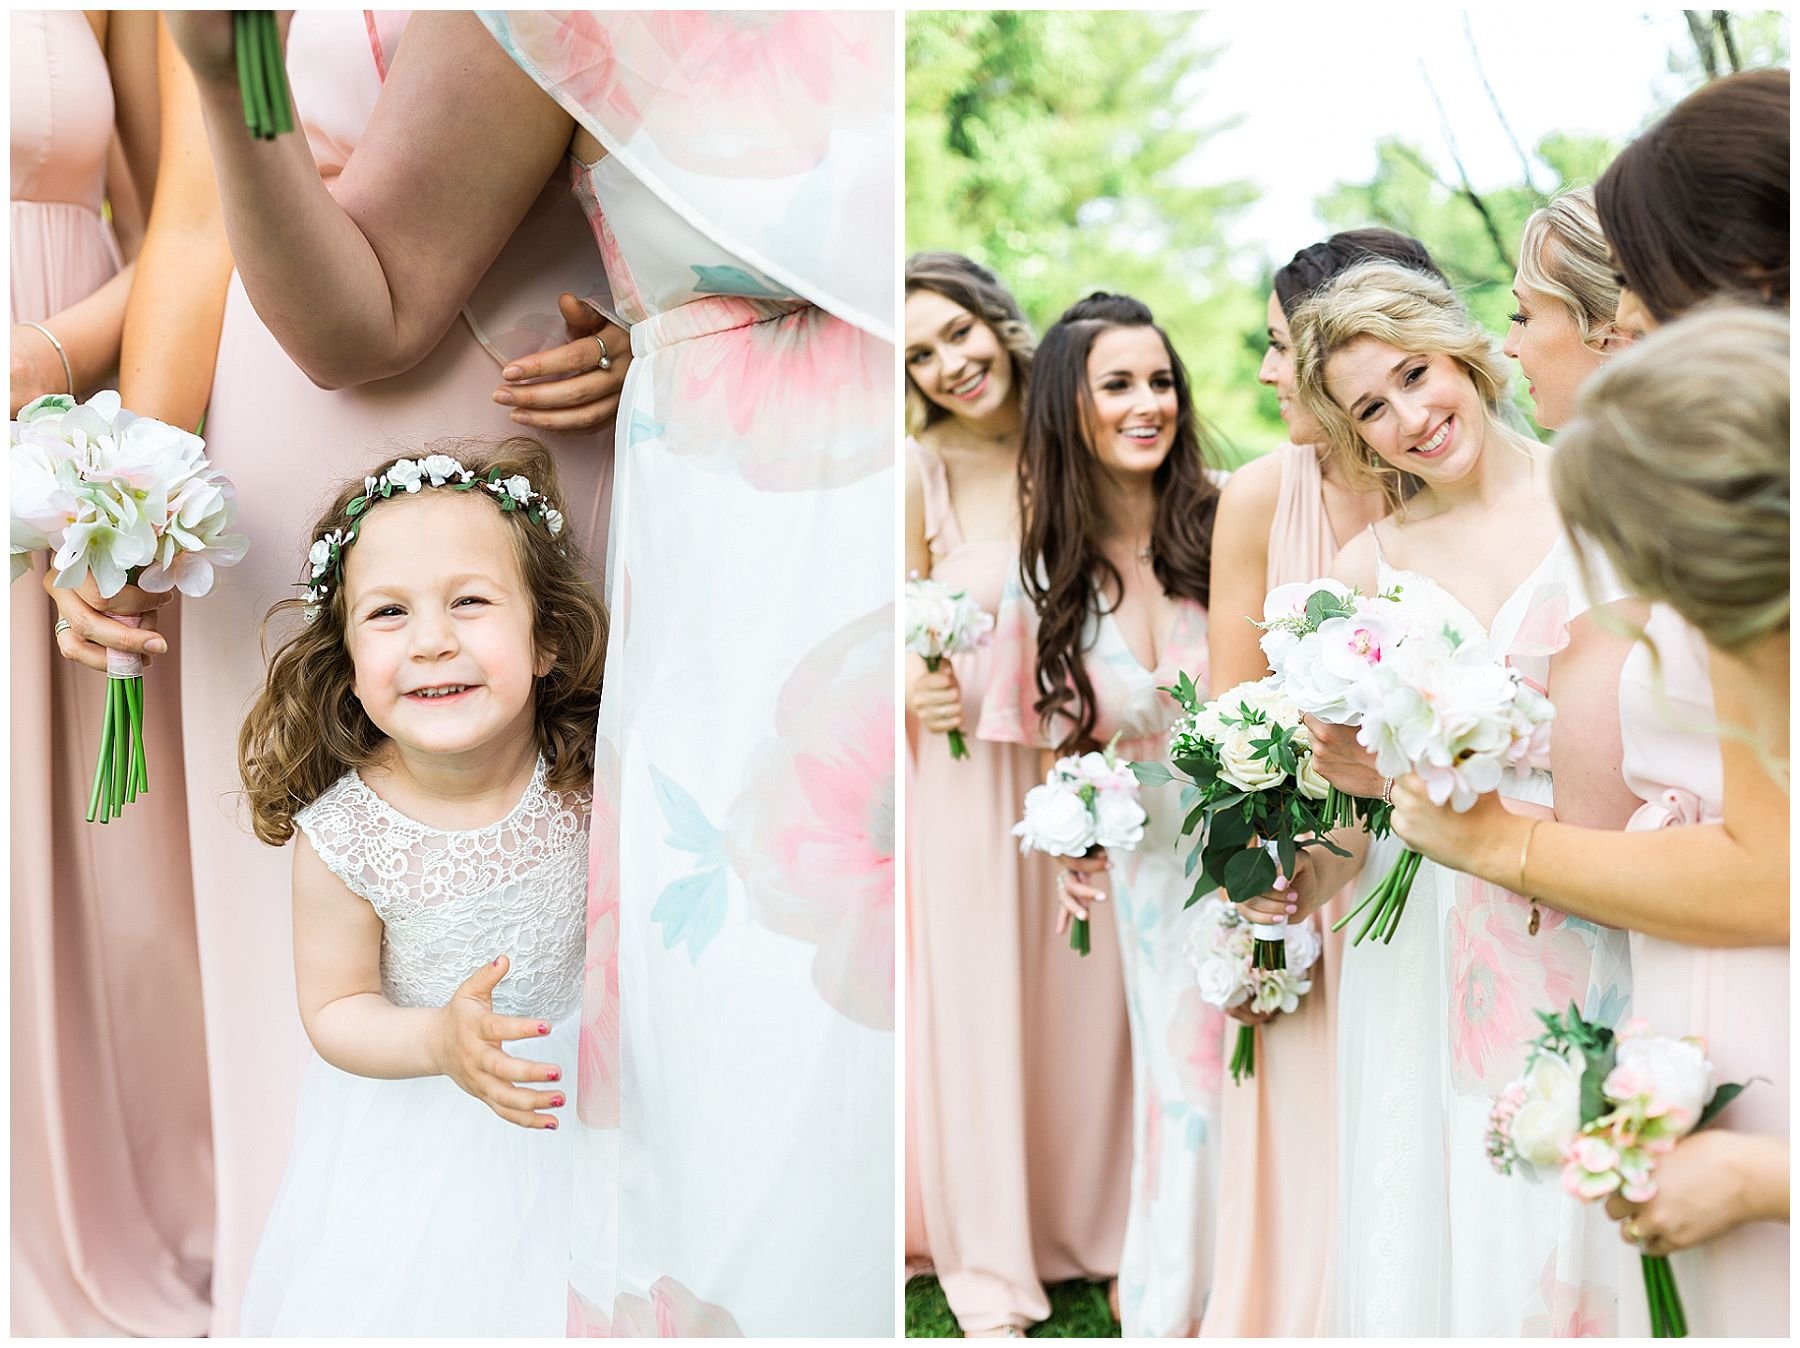 Floral, blush and cream bridesmaids